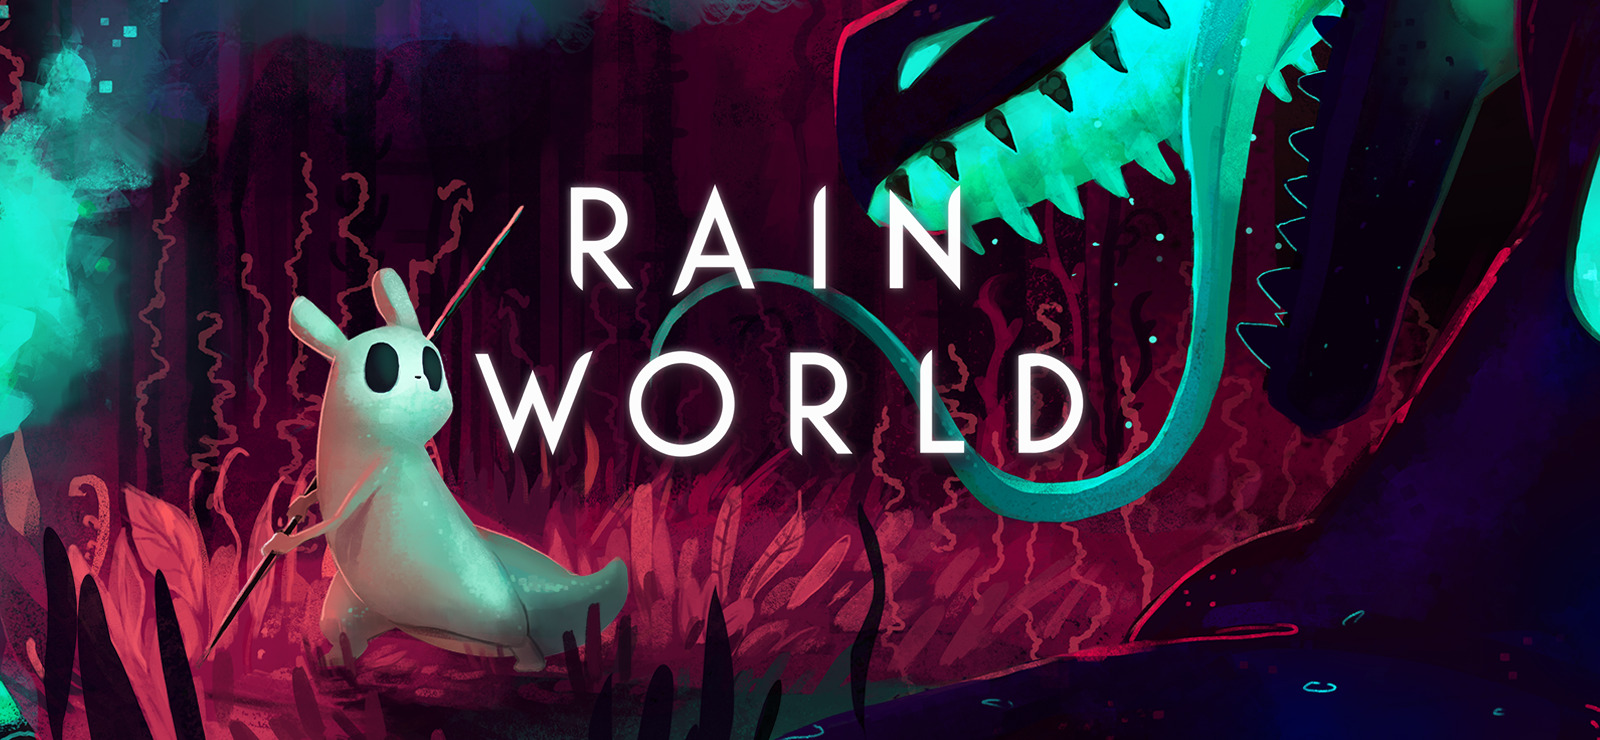 RAIN WORLD Wallpapers in Ultra HD  4K  Gameranx